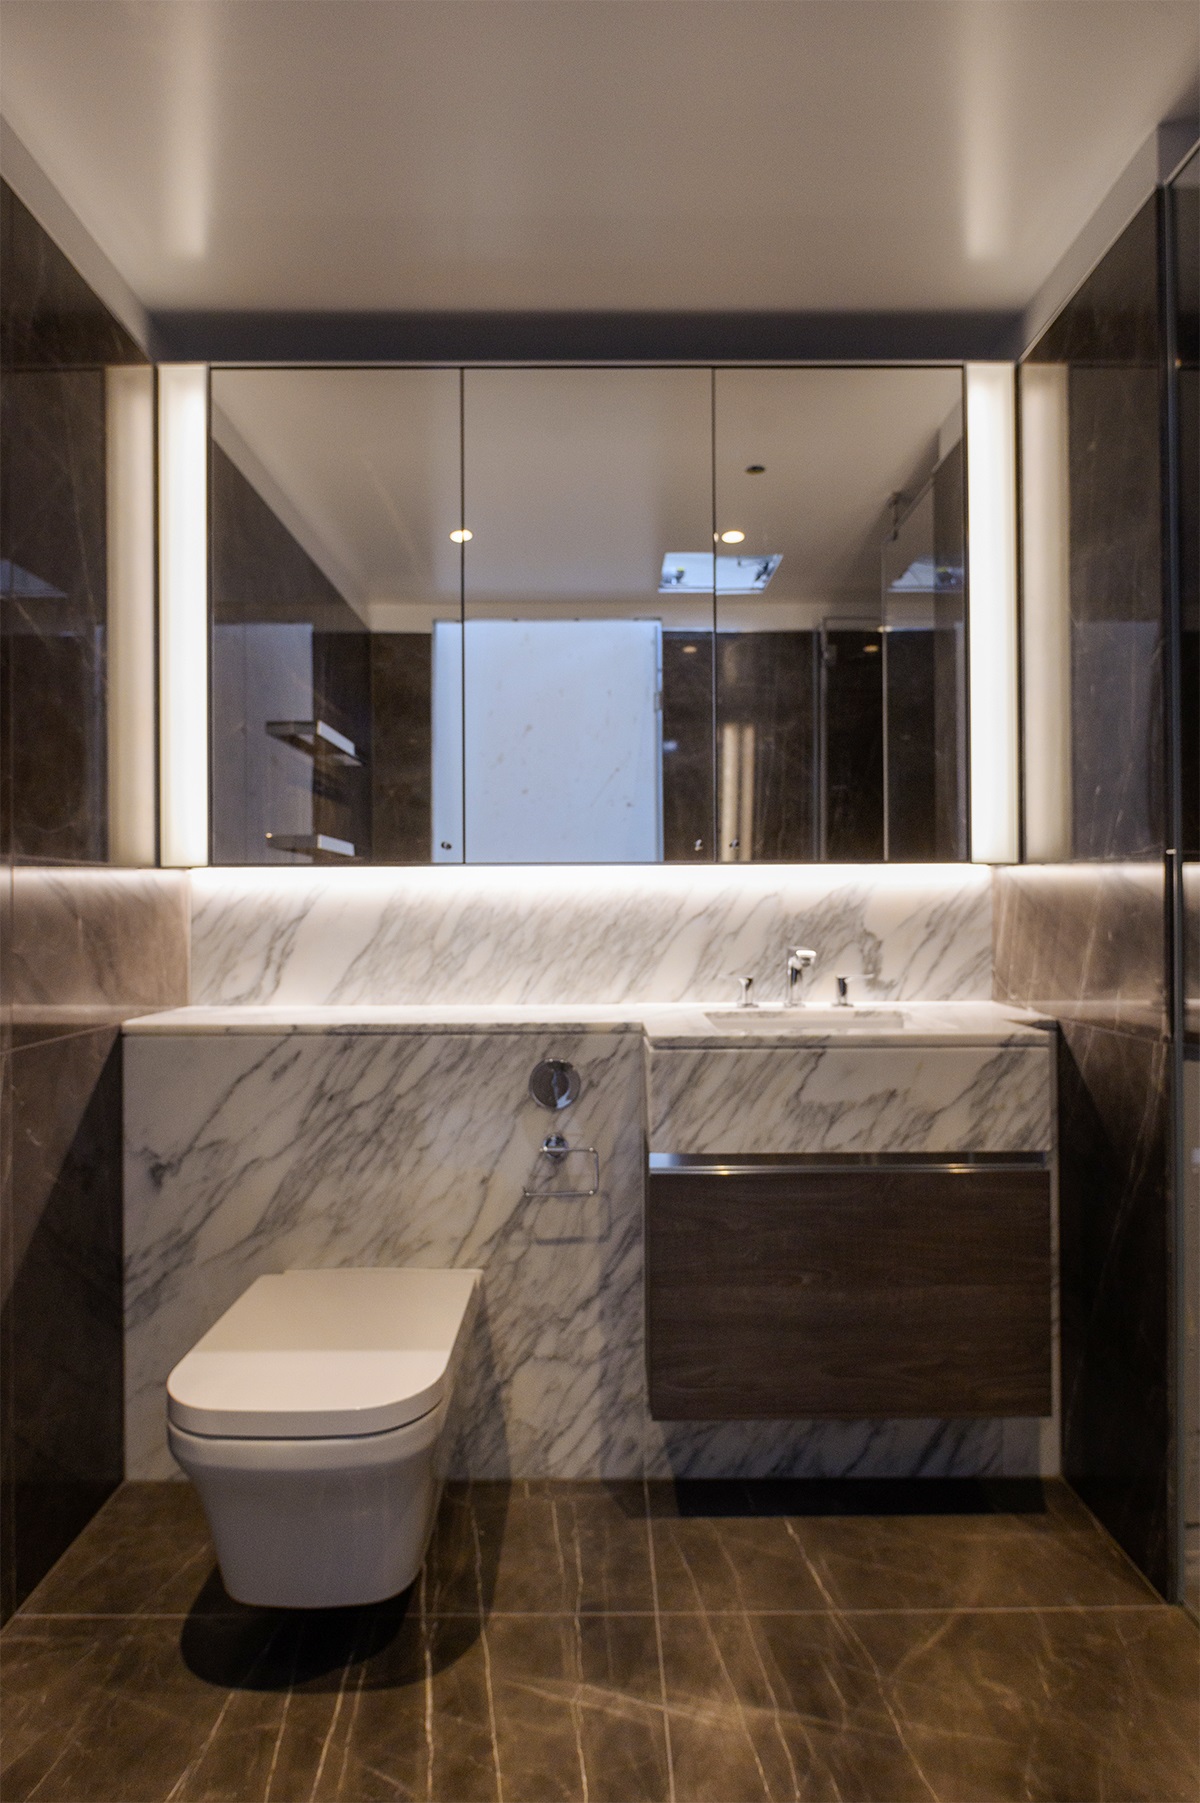 mirror, toilet and vanity in bathroom pod at Regents Crescent by StoneBathwear